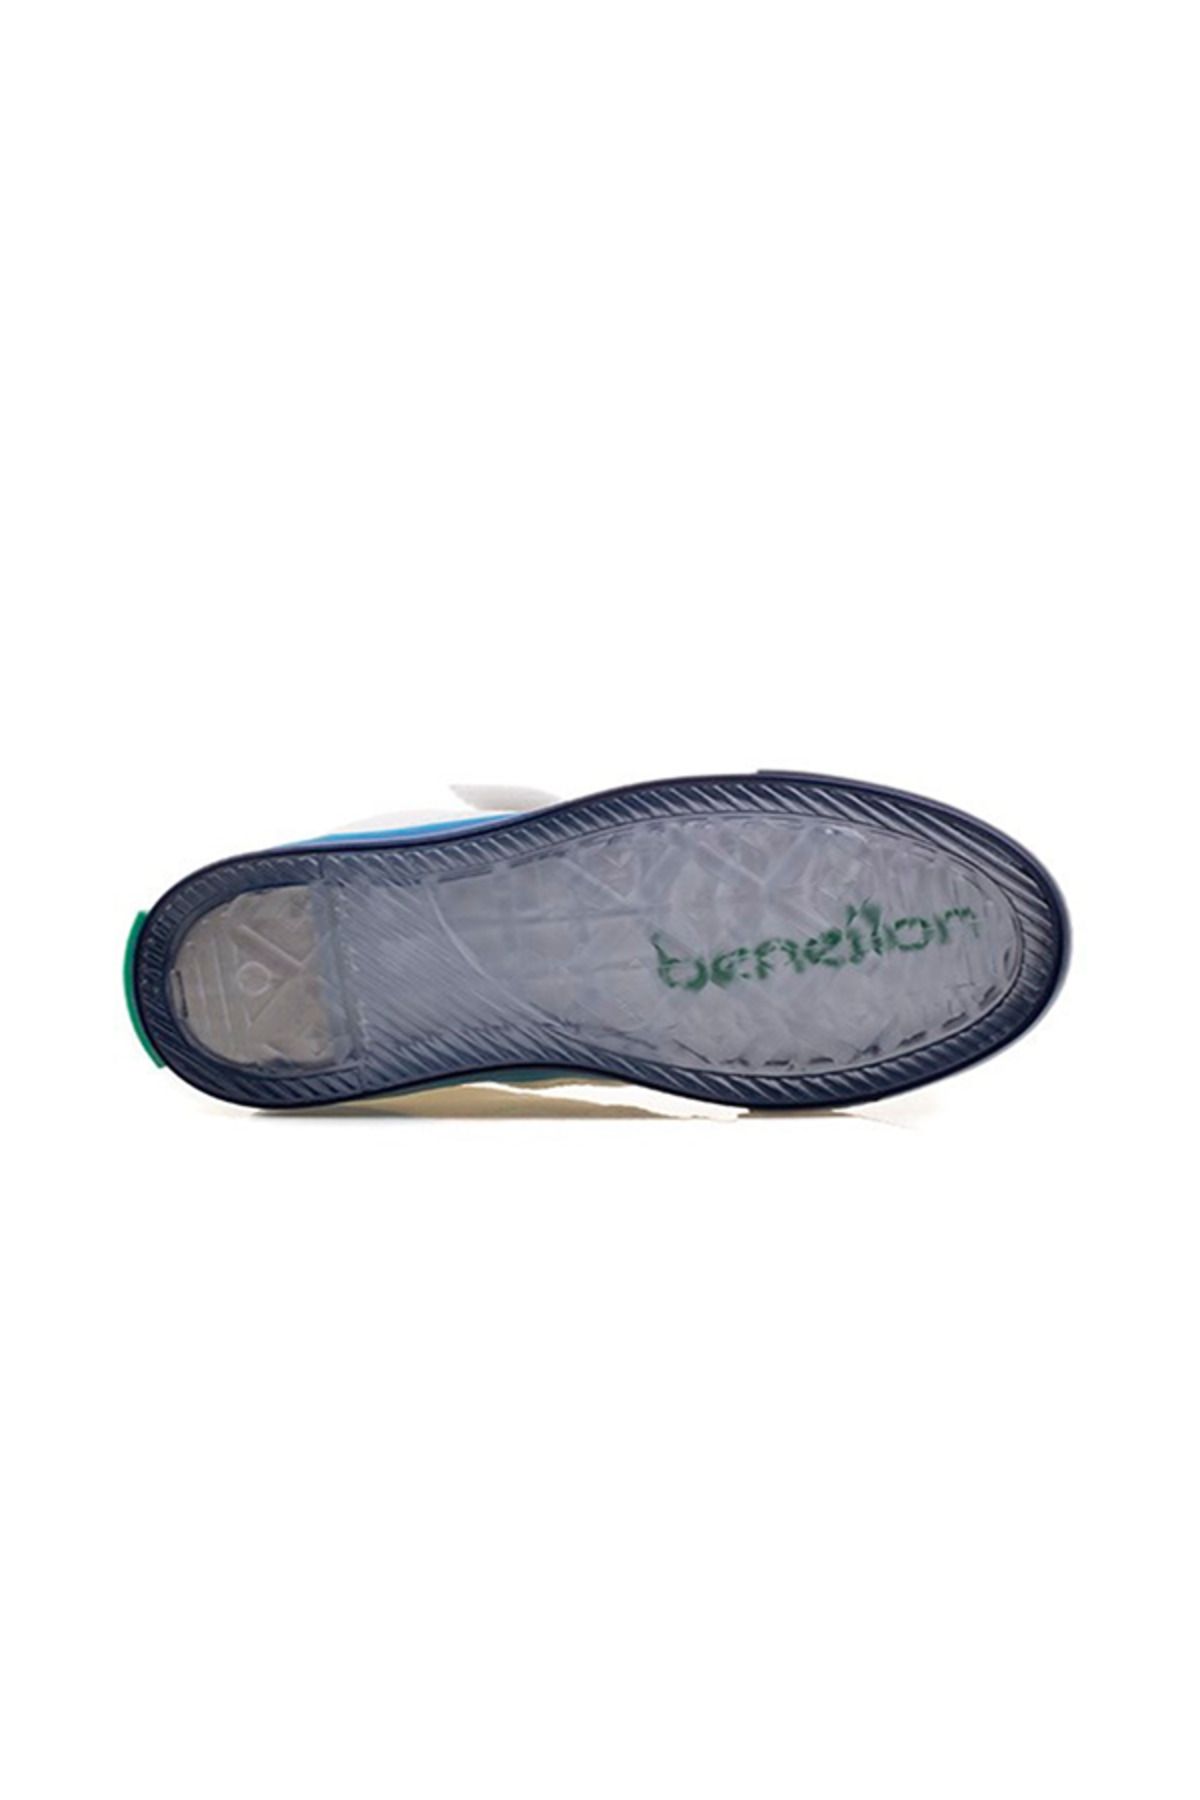 Benetton کفش ورزشی بچه گانه BN-30445